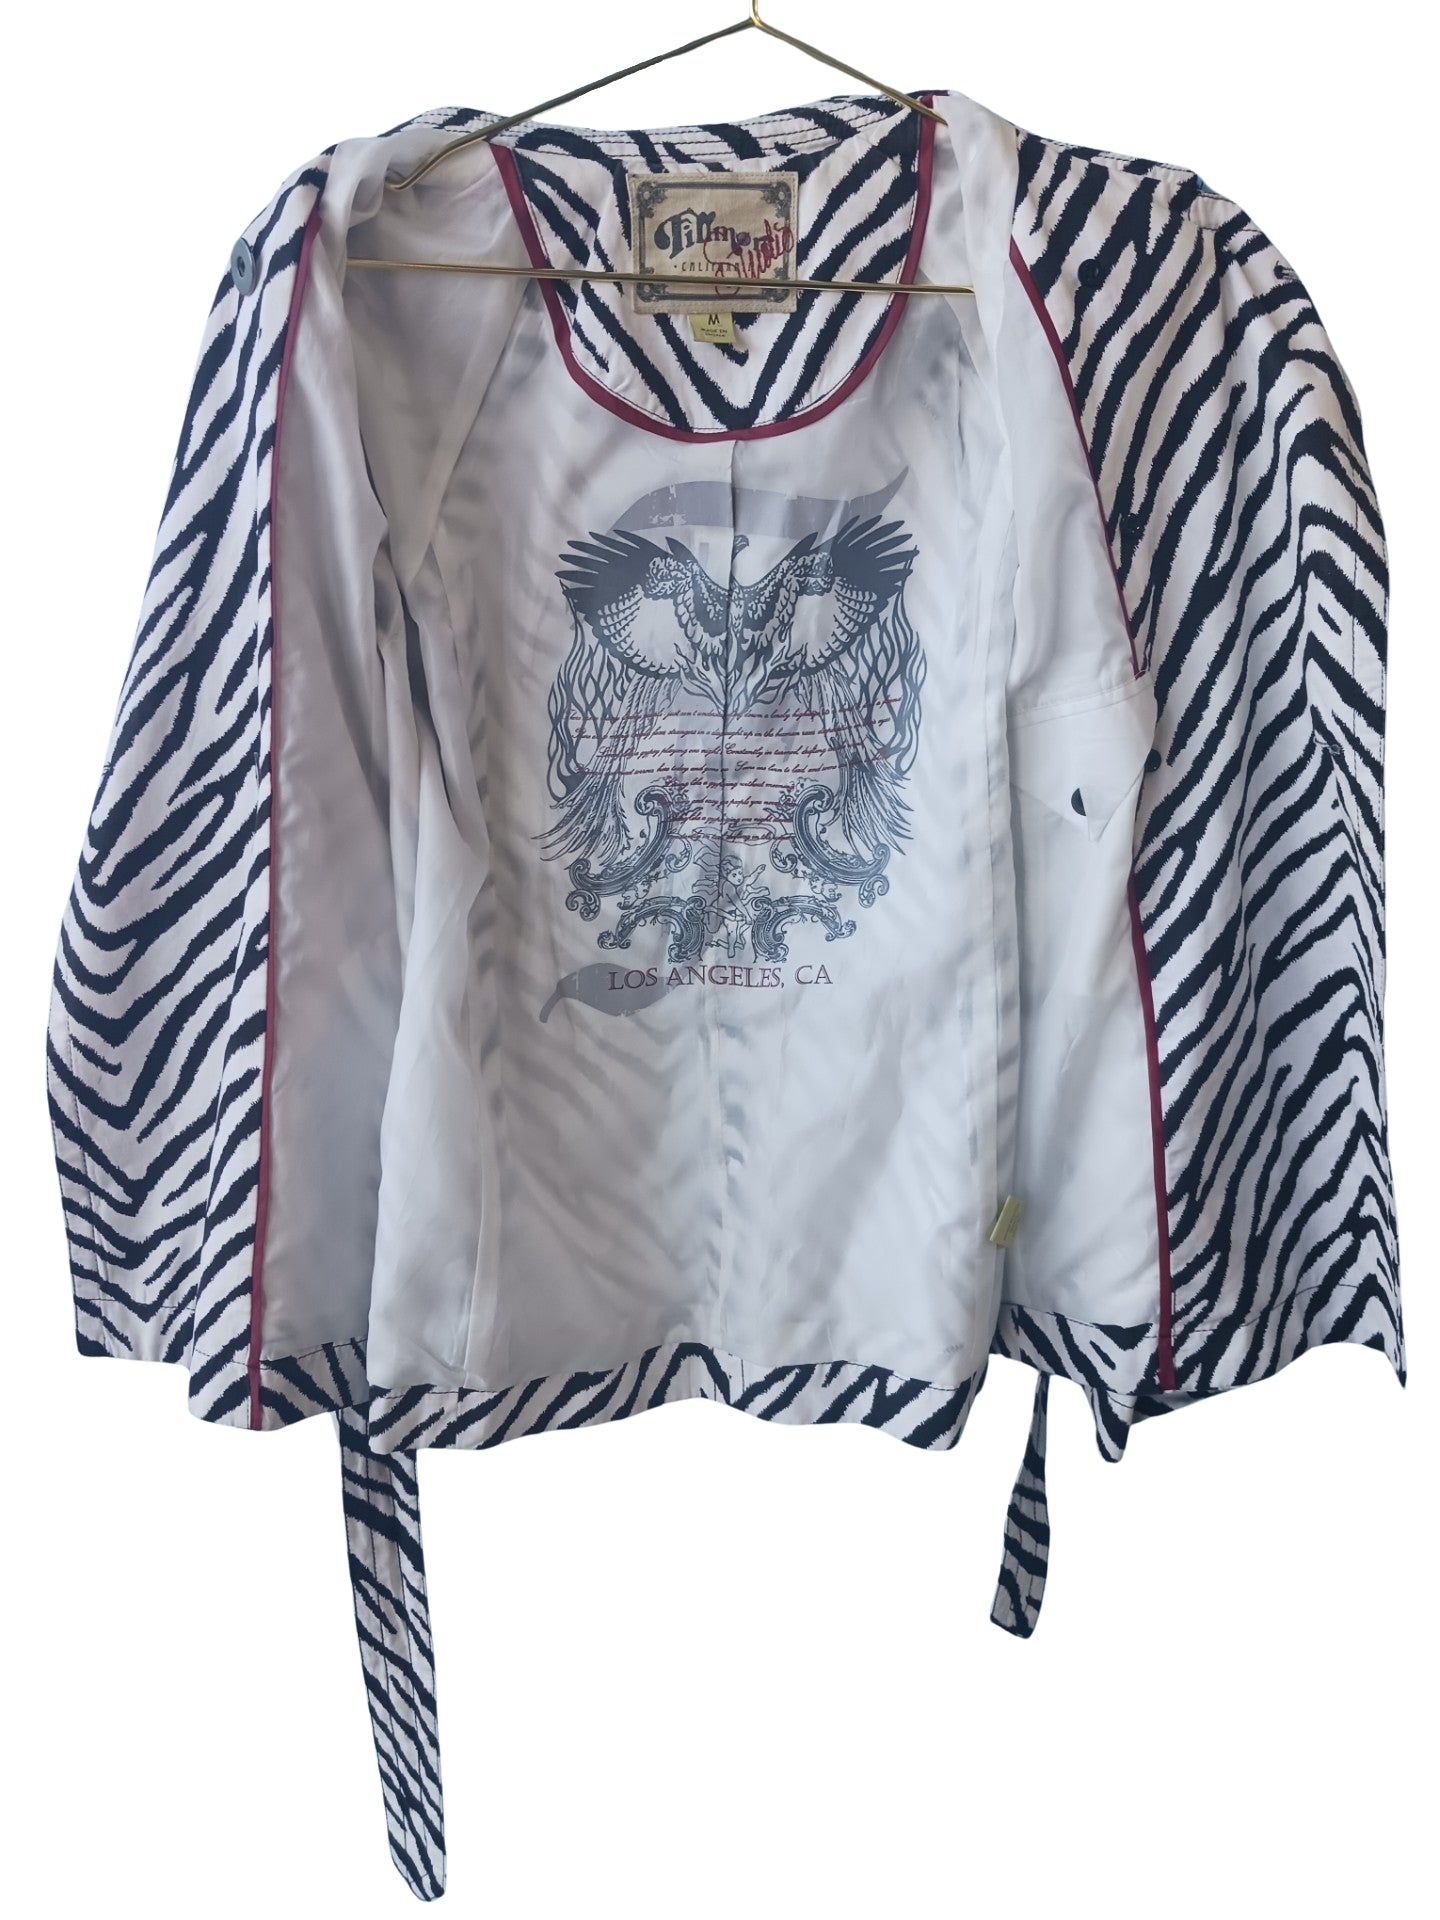 Fillmore Studio California Zebra Jacket, Size Medium